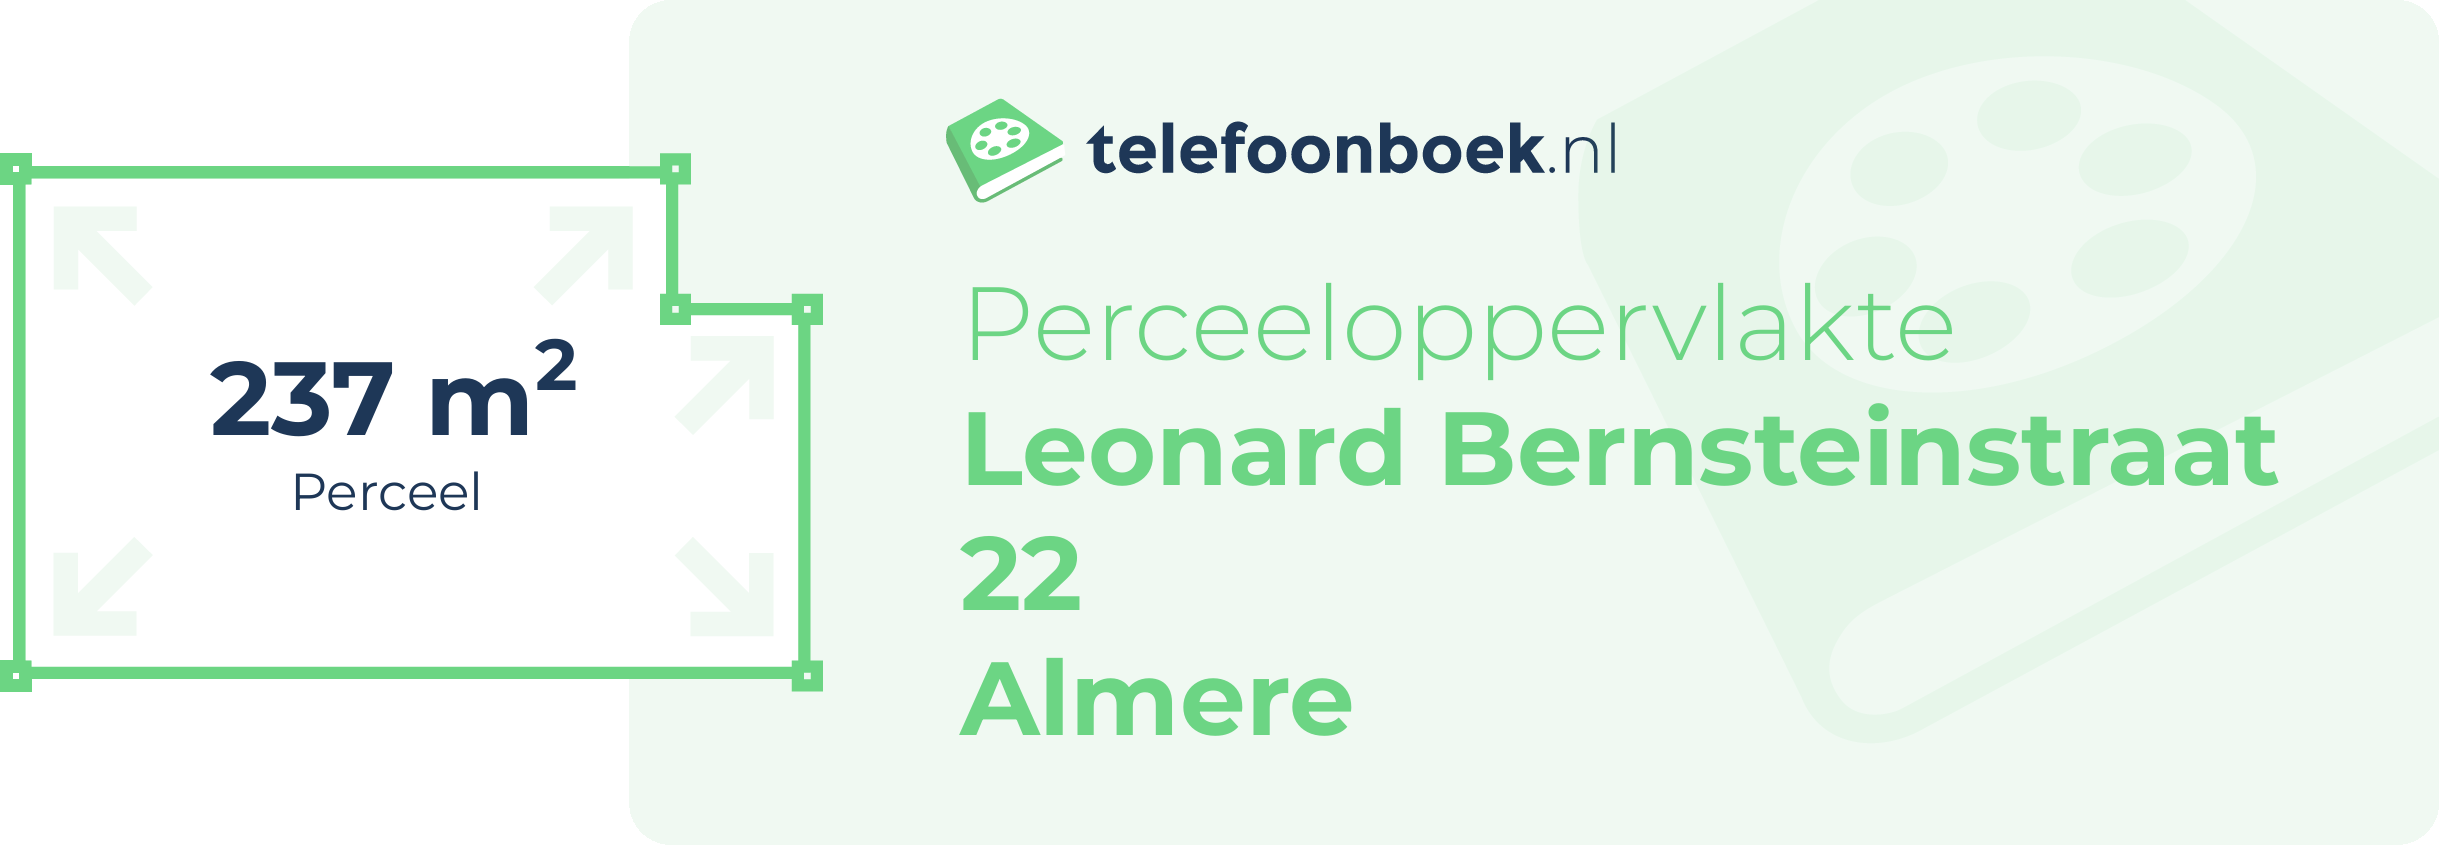 Perceeloppervlakte Leonard Bernsteinstraat 22 Almere